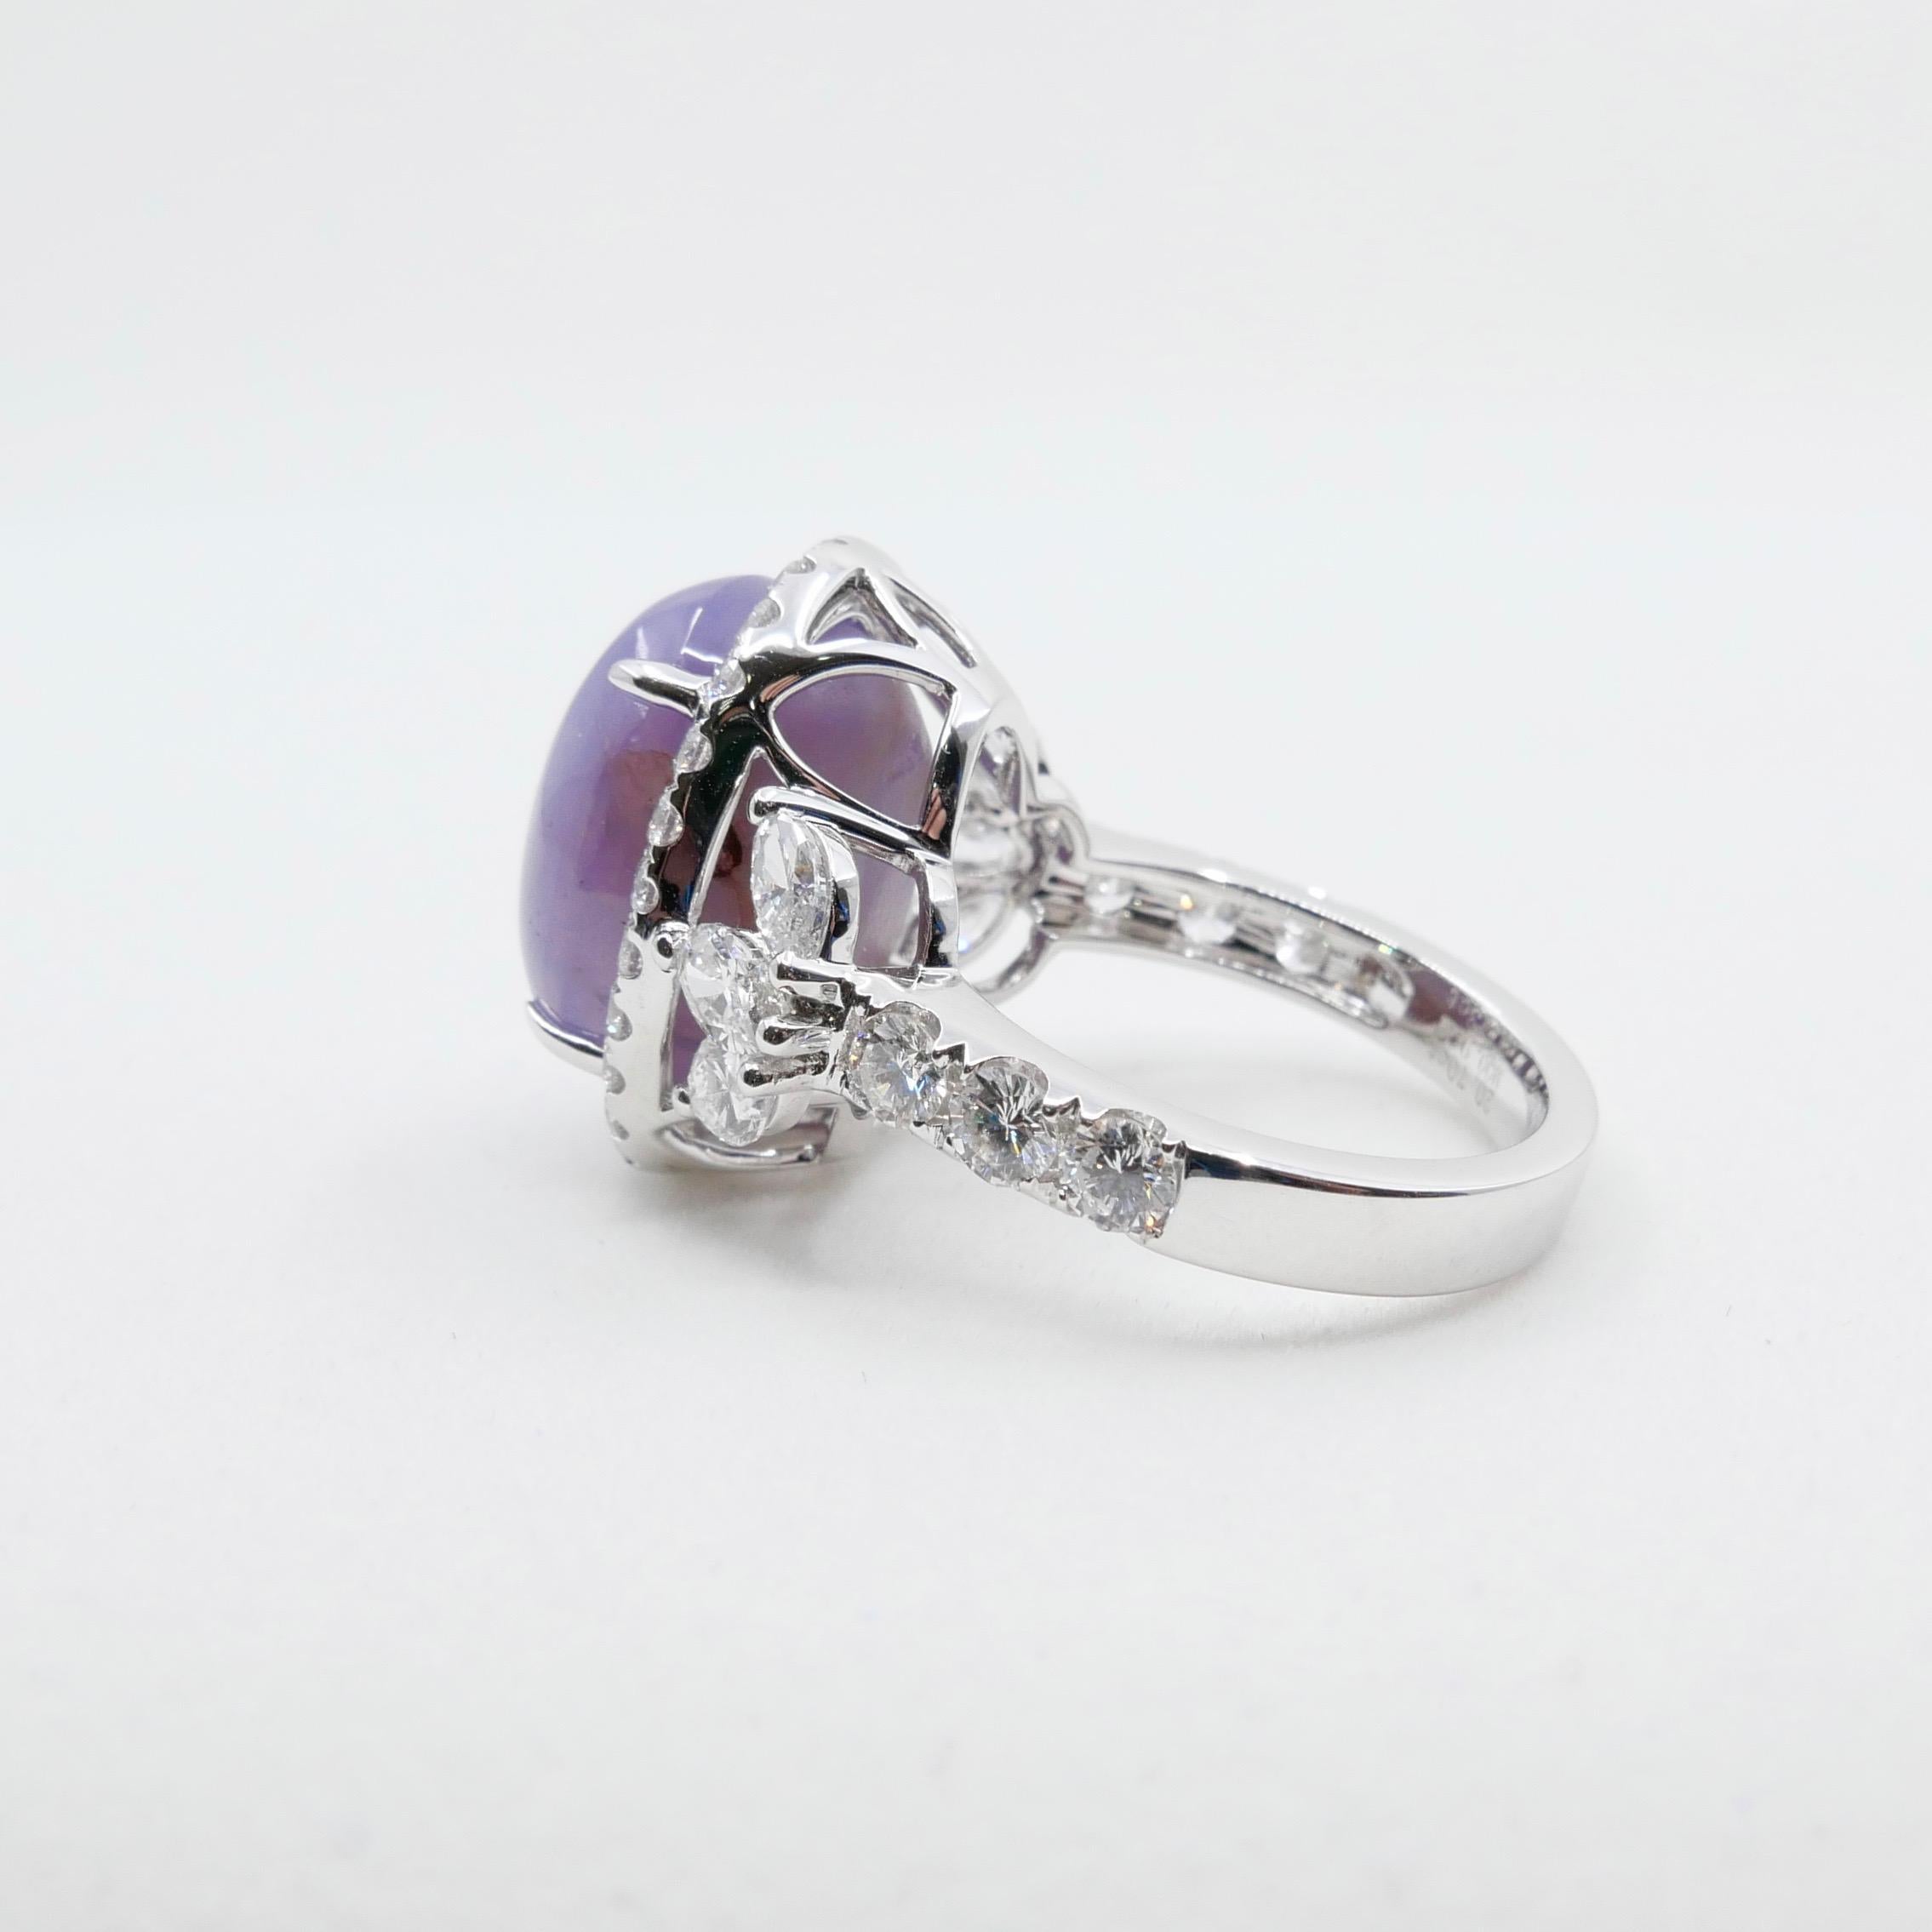 Certified Purple Star Sapphire 20.70 Carat Diamond Cocktail Ring, Statement Ring 6